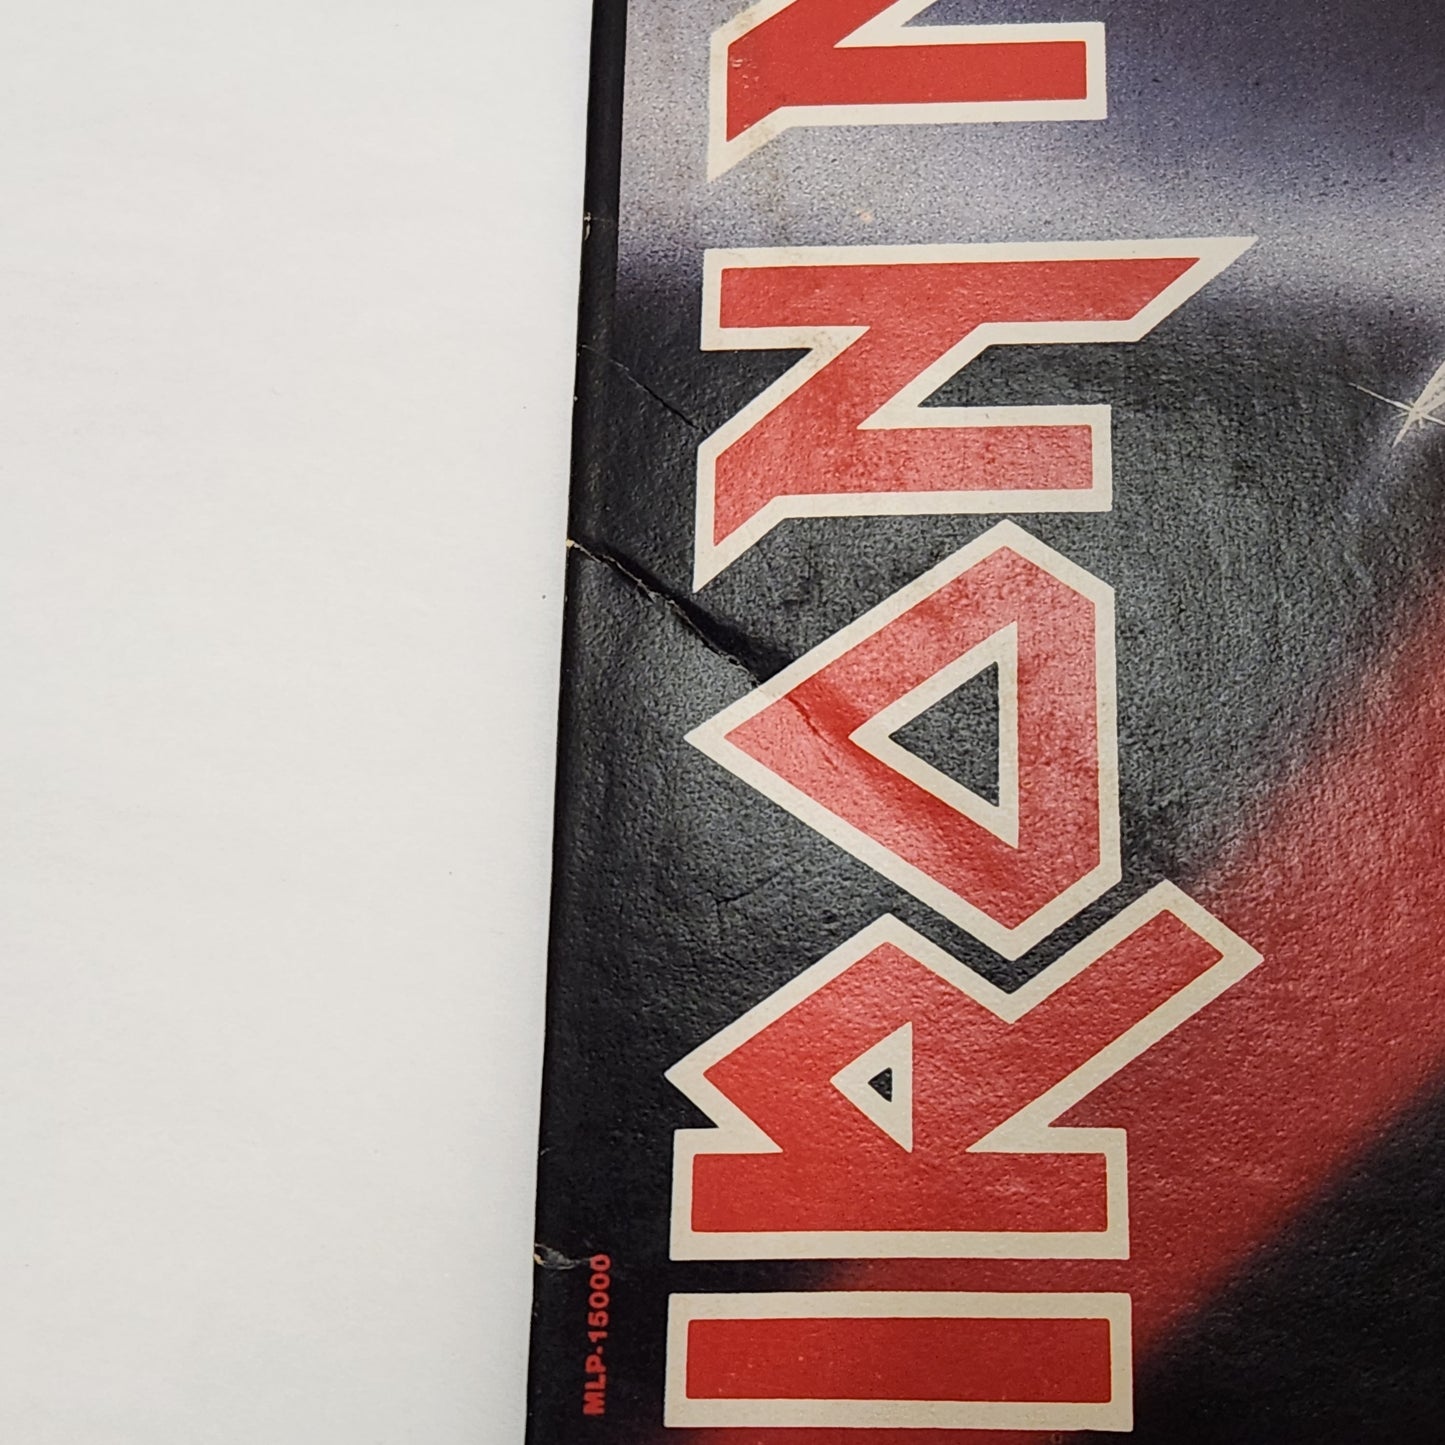 Iron Maiden "Maiden Japan" 1981 Heavy Metal Mini LP Record Album